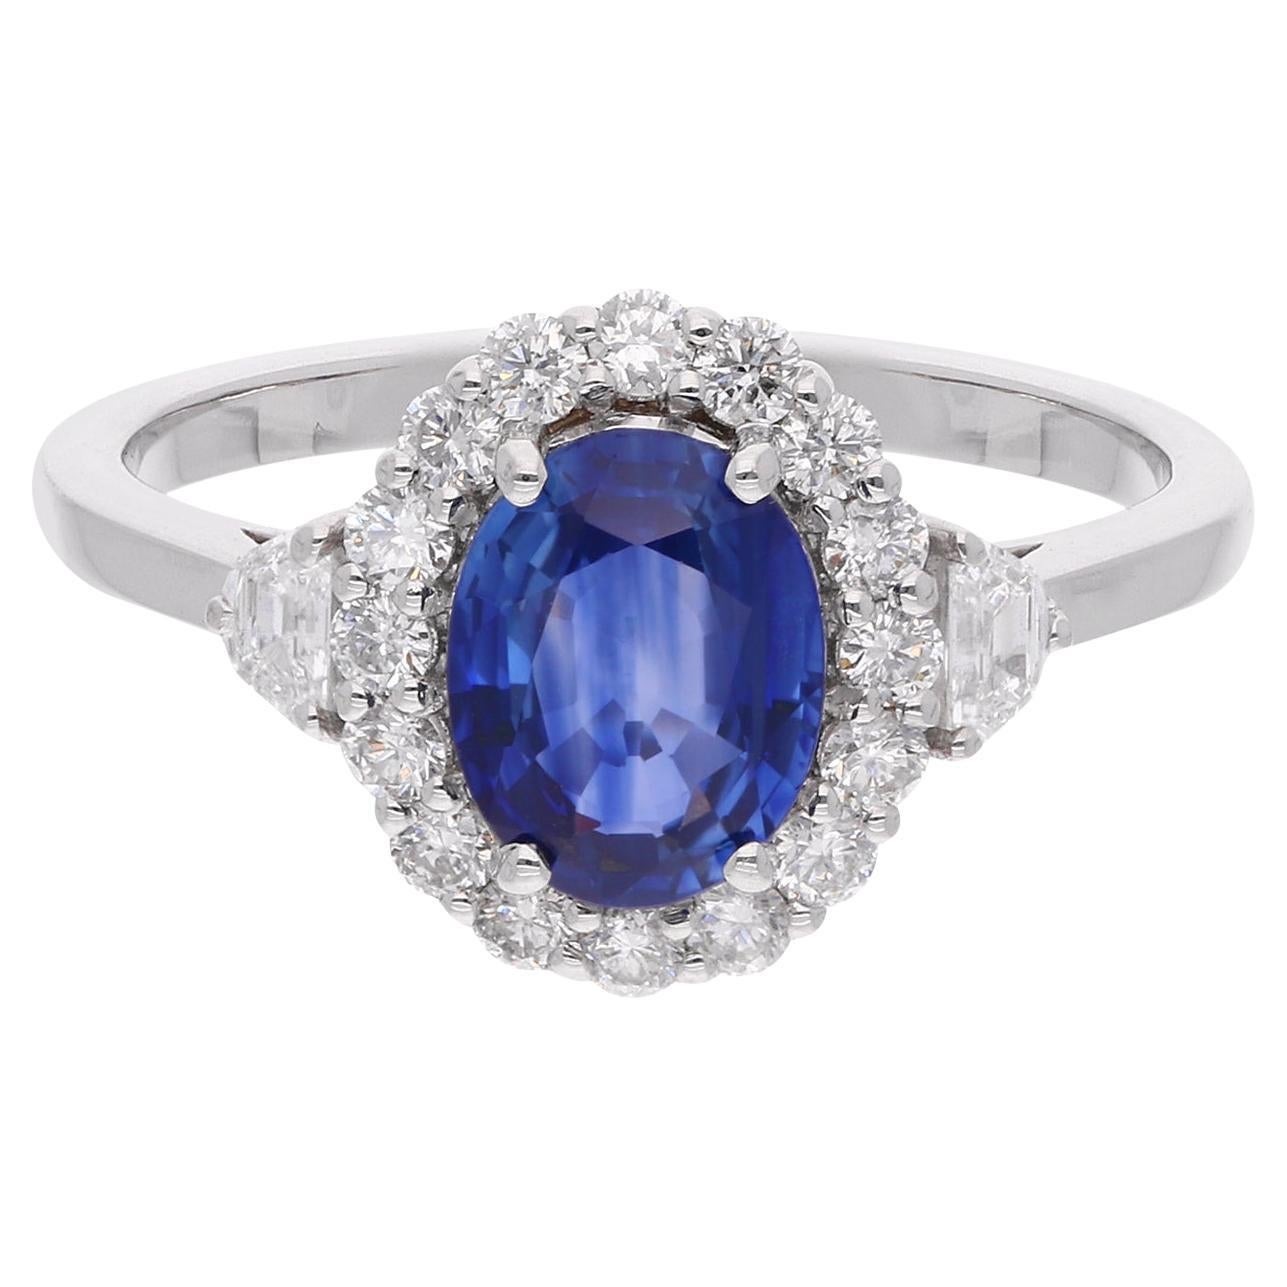 Oval Blue Sapphire Gemstone Cocktail Ring Diamond 14 Karat White Gold Jewelry